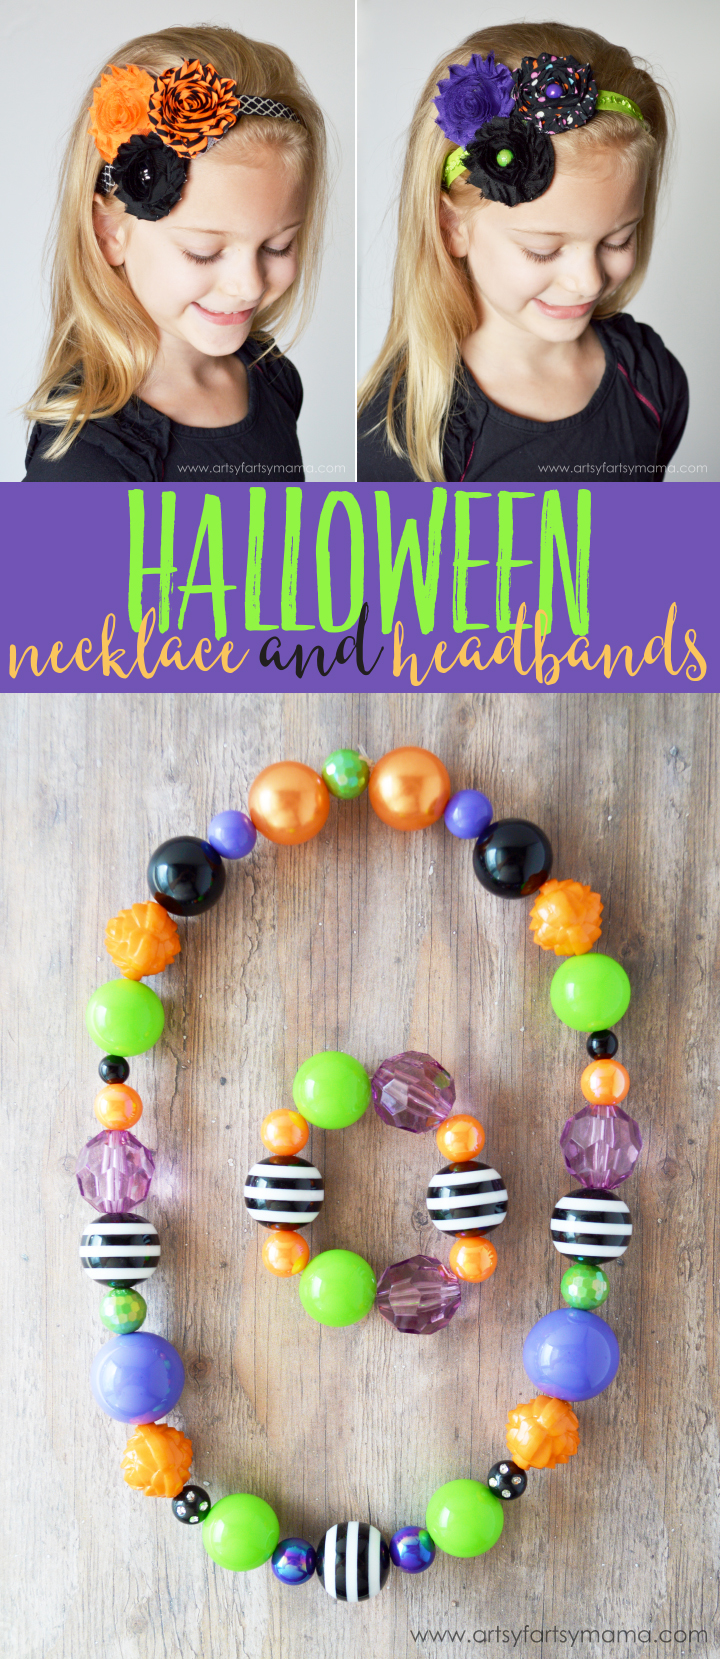 Easy Halloween Necklace and Headbands